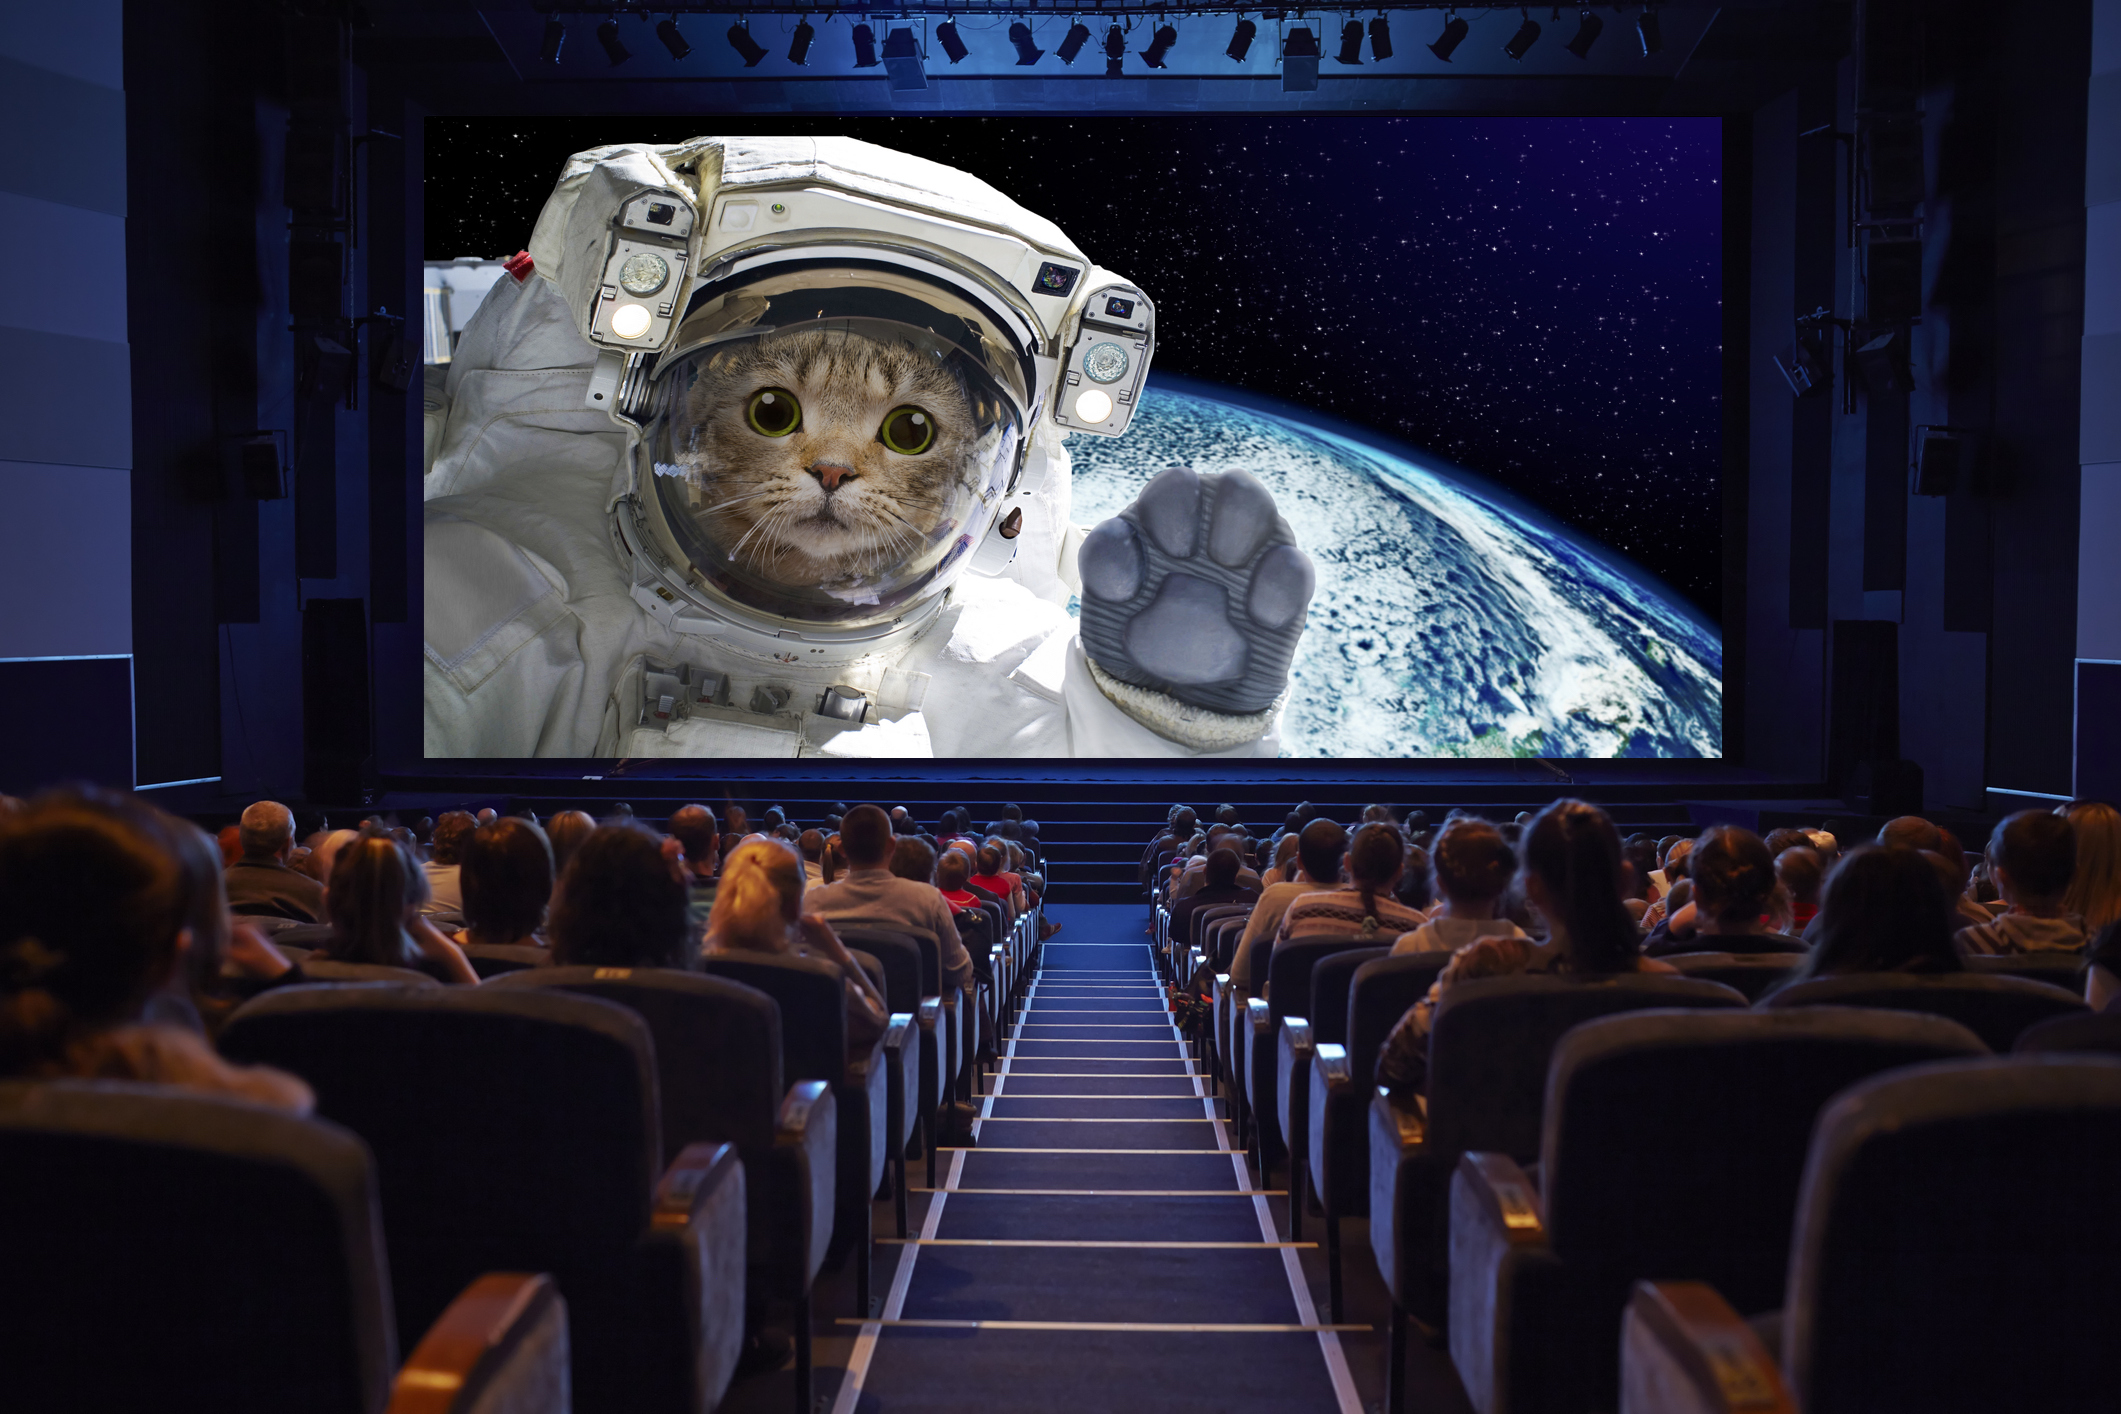 A cinema audience enjoys a sci-fi film about a cat